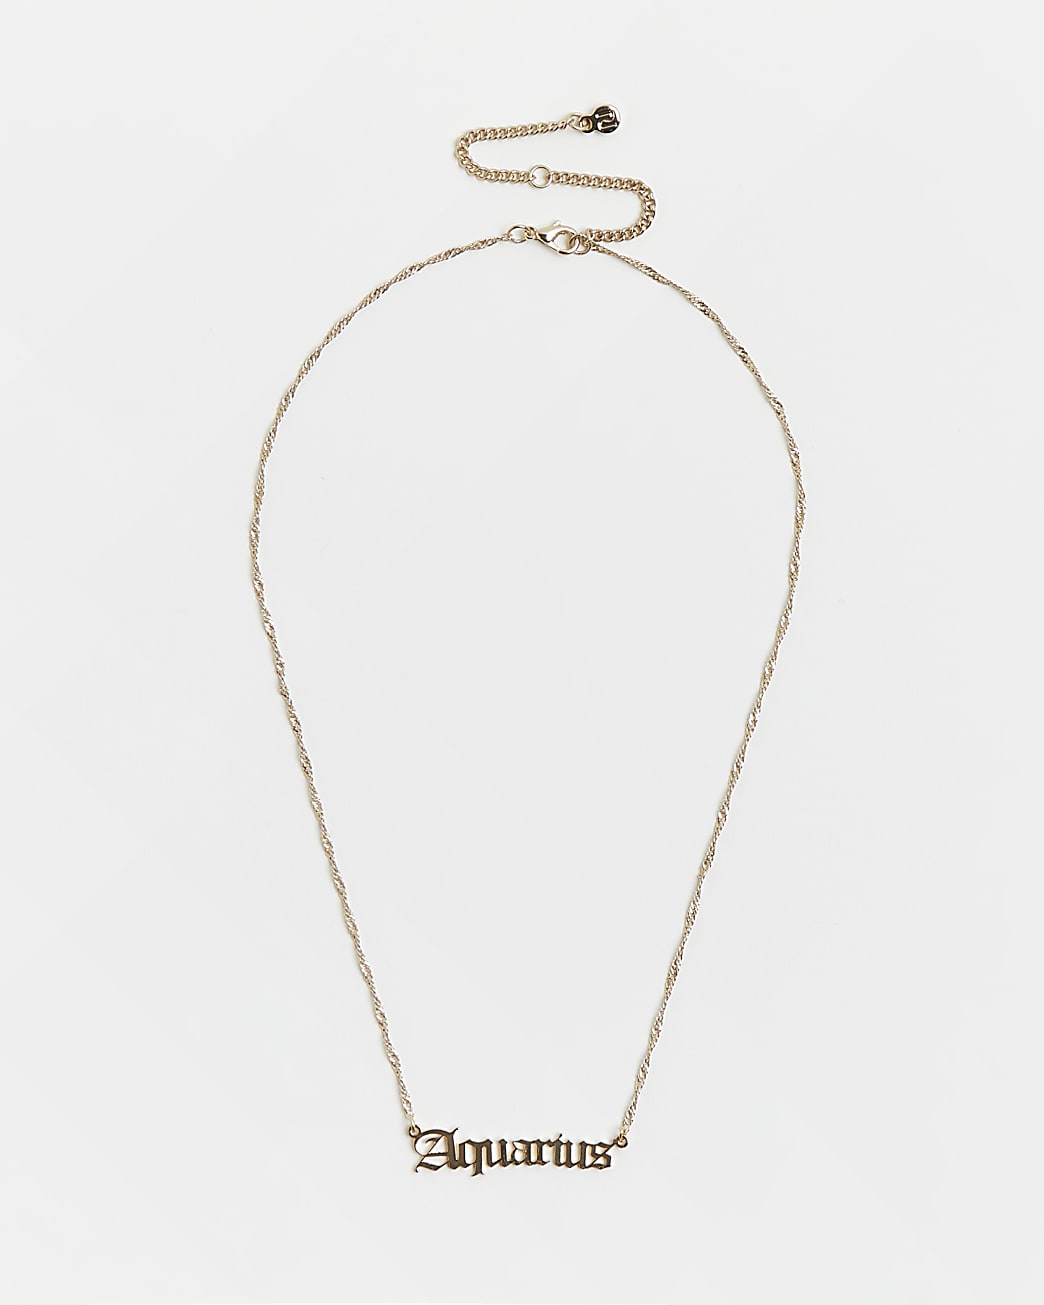 Gold 'Aquarius' astrological sign necklace